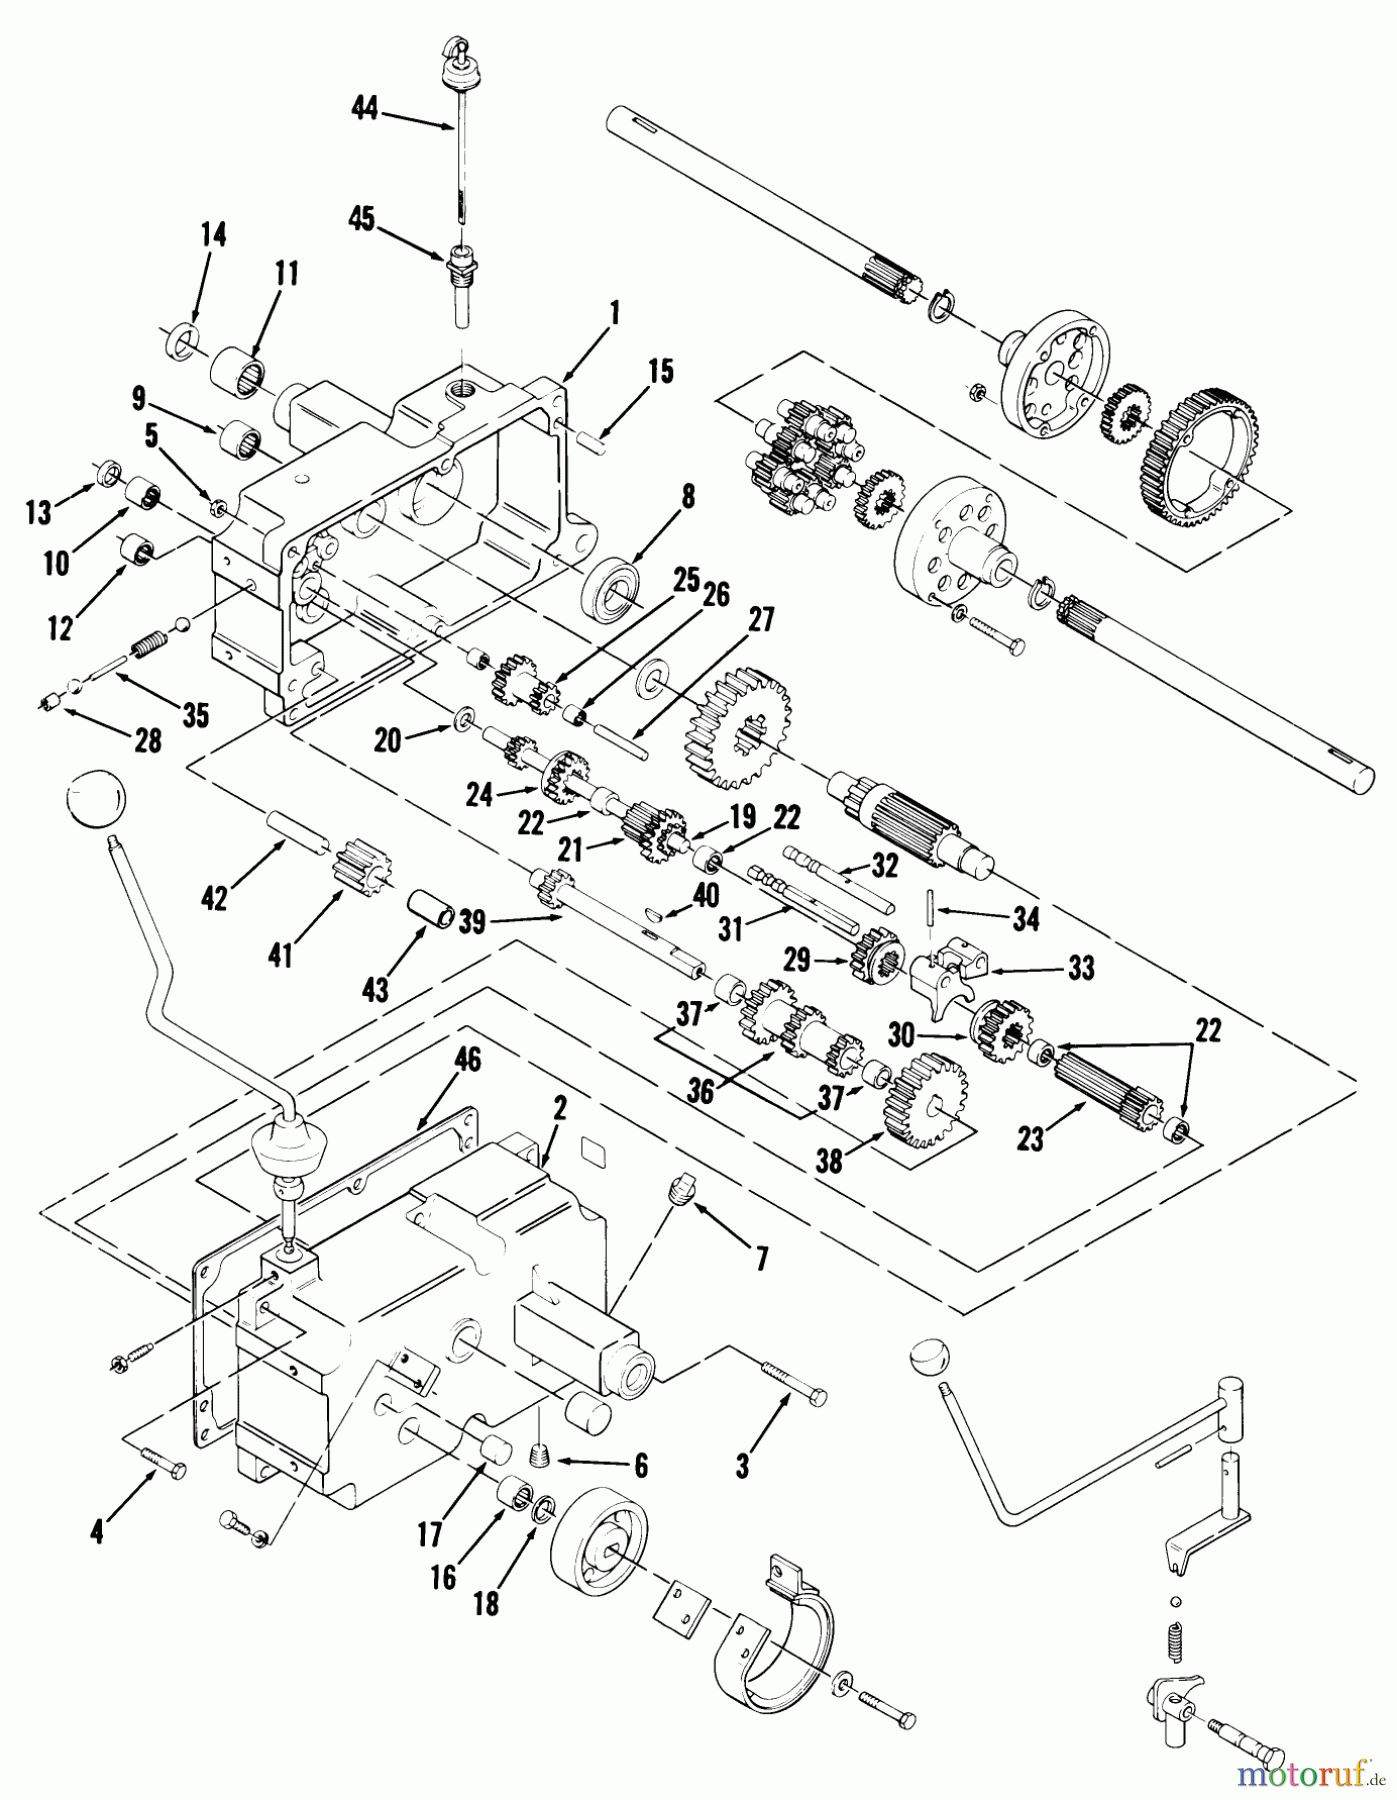  Toro Neu Mowers, Lawn & Garden Tractor Seite 1 01-16KS01 (C-165) - Toro C-165 Automatic Tractor, 1980 MECHANICAL TRANSMISSION-8 SPEED #1